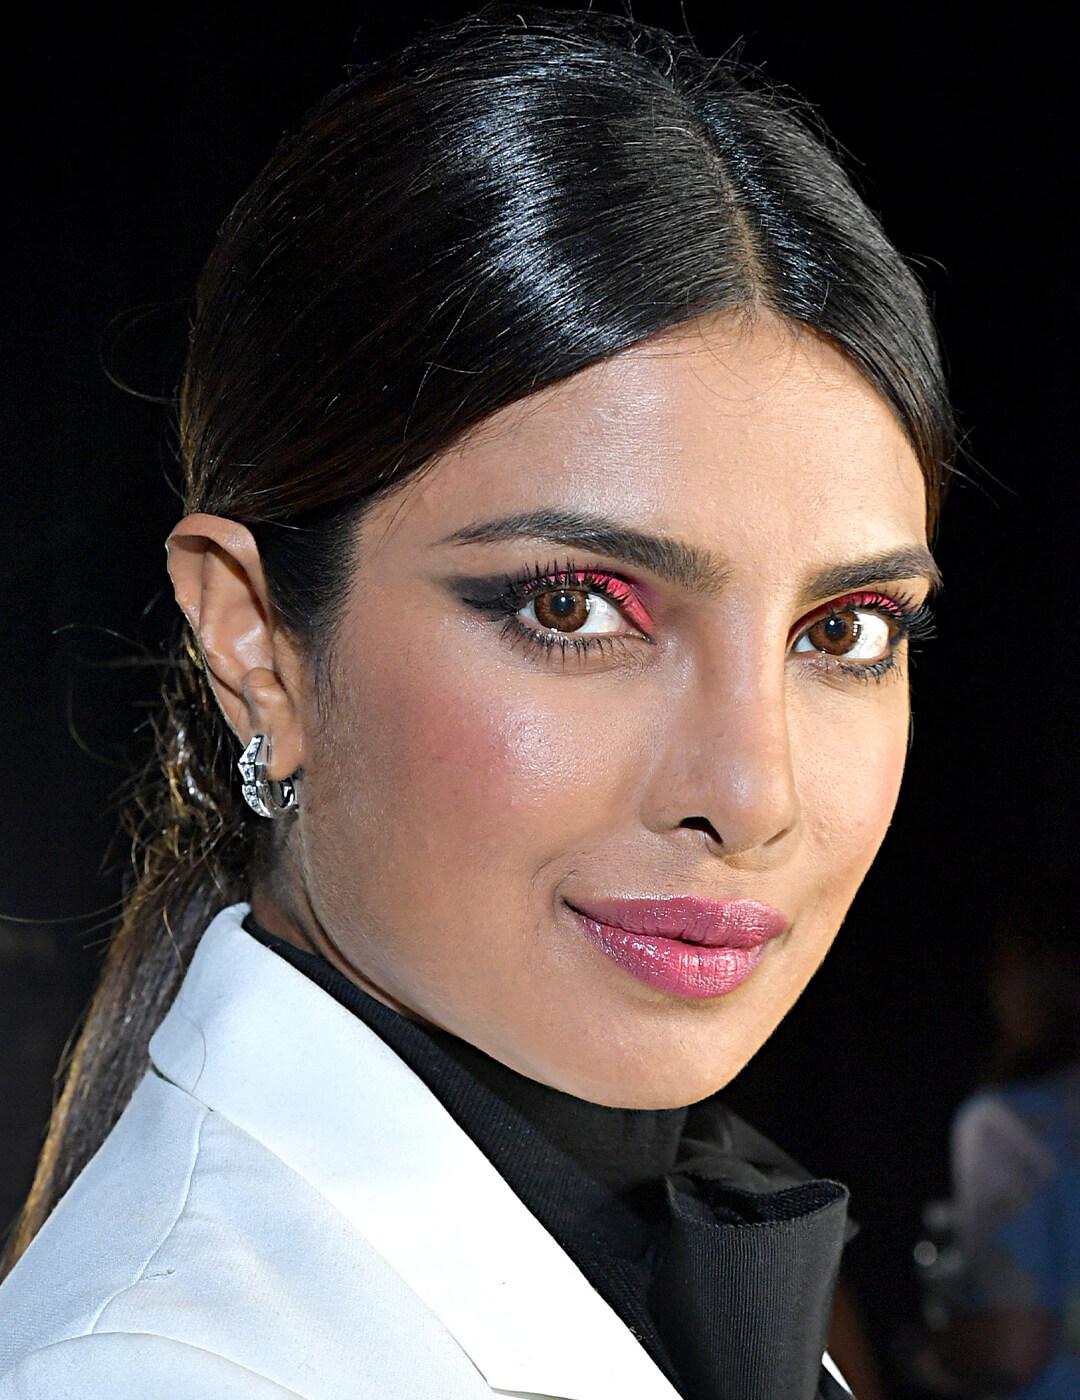 Priyanka Chopra rocking a bold red eyeshadow makeup look paired with glossy pink lips